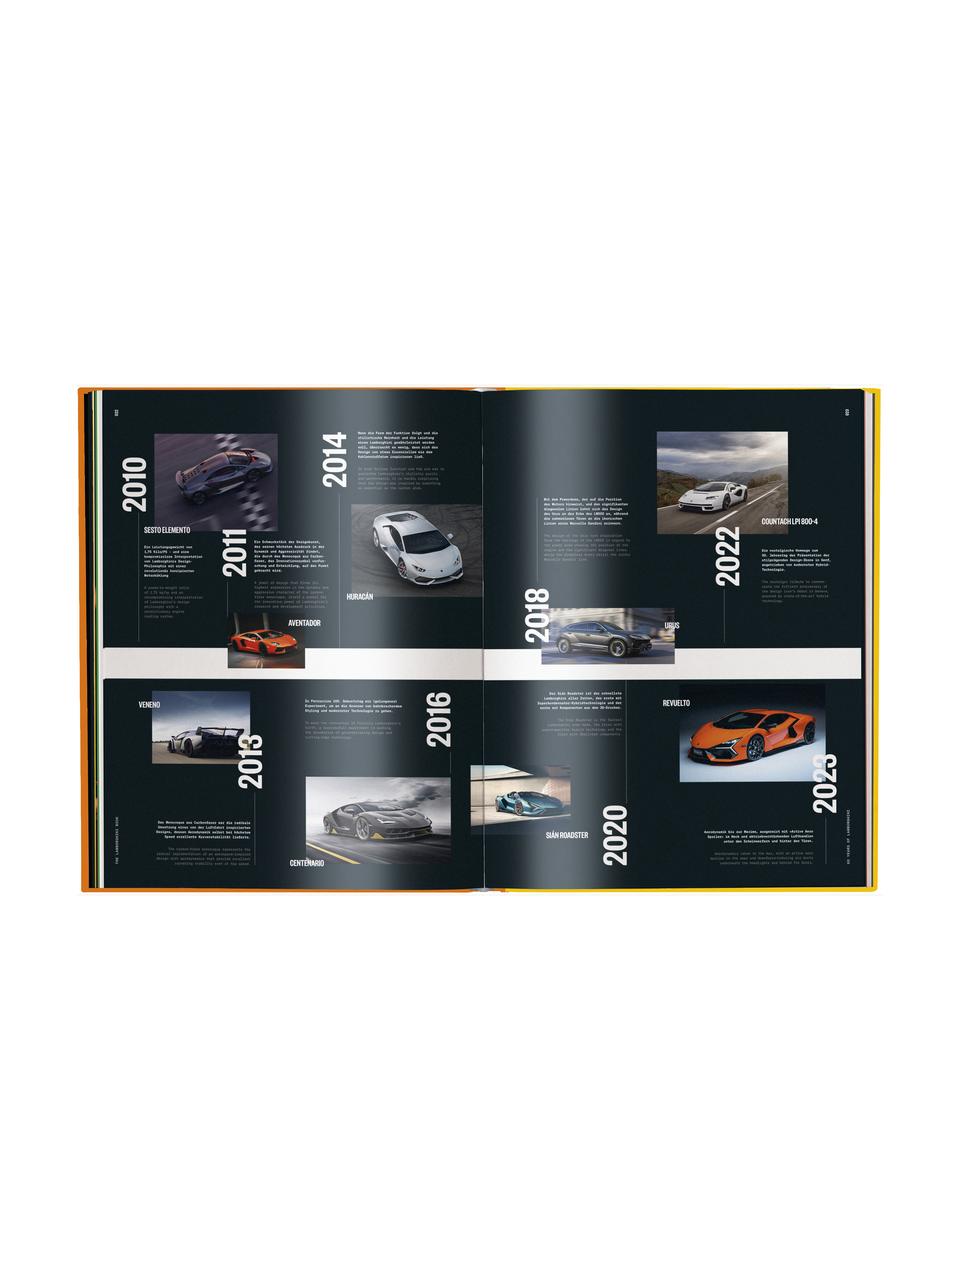 Ilustrovaná kniha The Lamborghini Book, Papier, The Lamborghini Book, Š 30 x V 38 cm